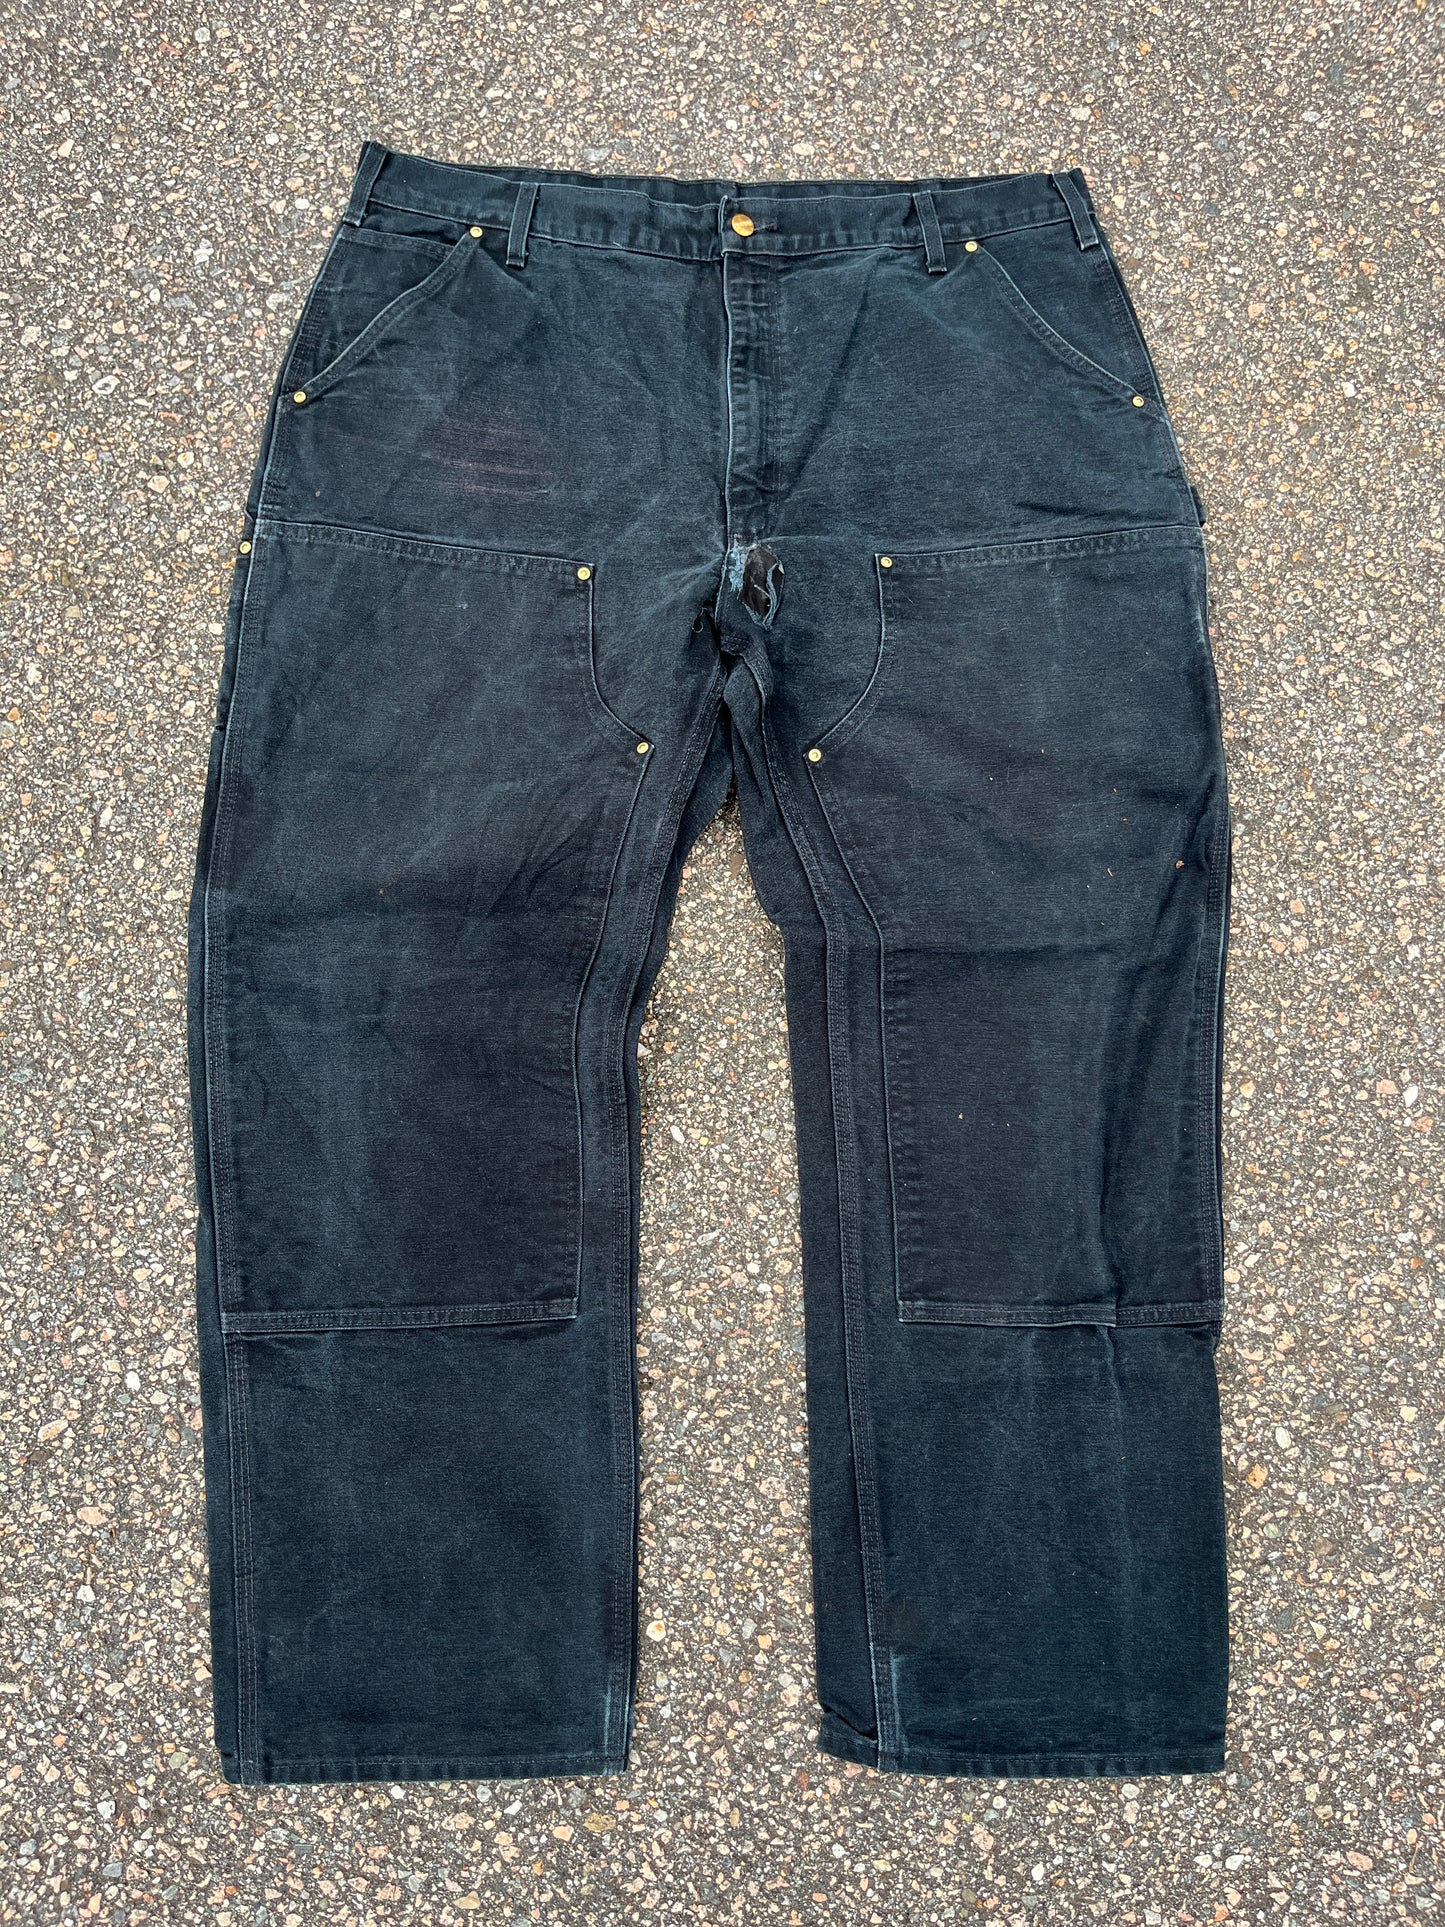 Faded Black Carhartt Double Knee Pants - 40 x 30